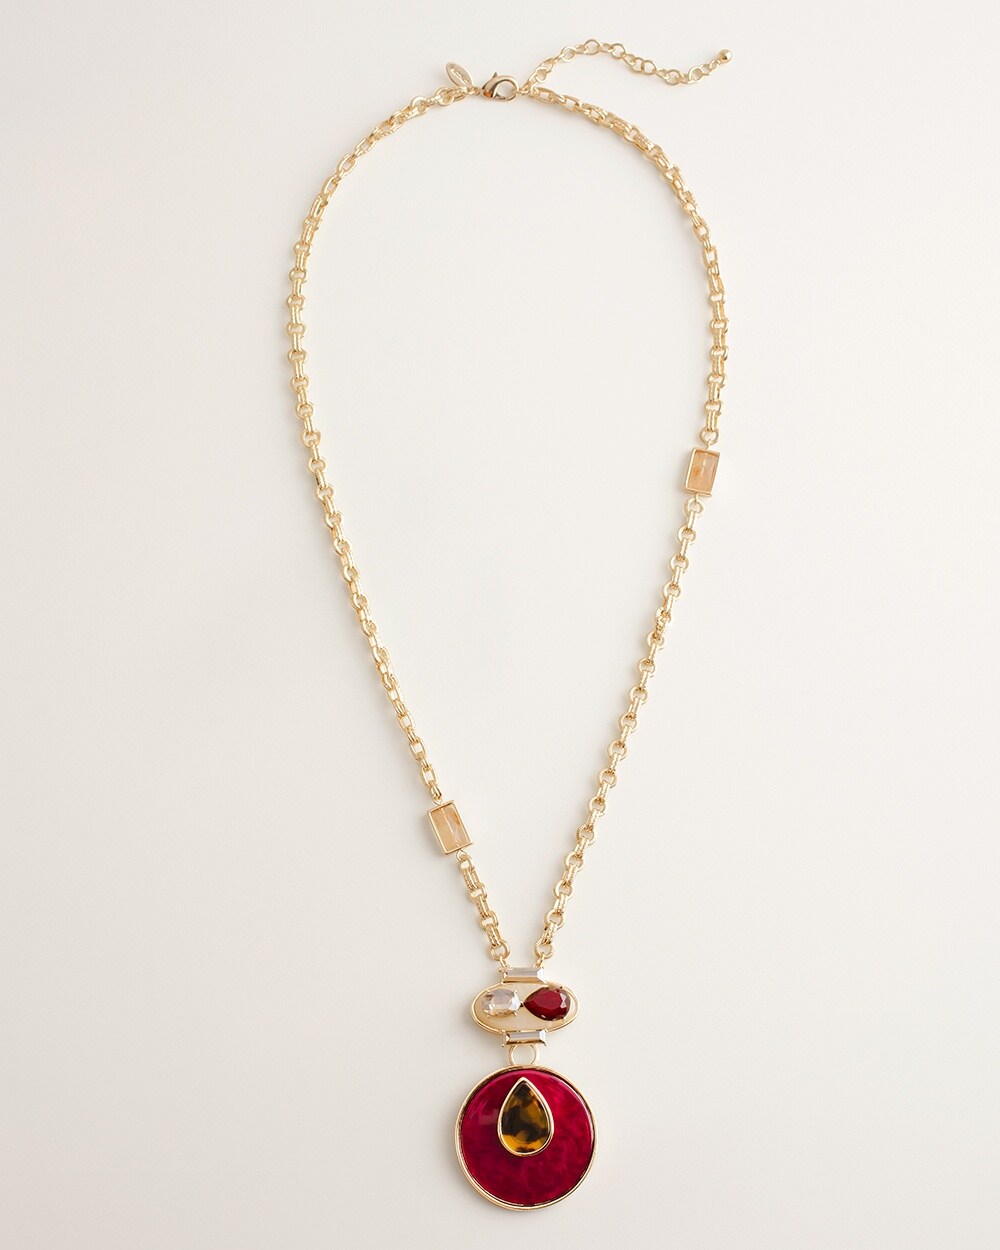 Long Faux-Tortoiseshell and Shiraz-Hued Pendant Necklace